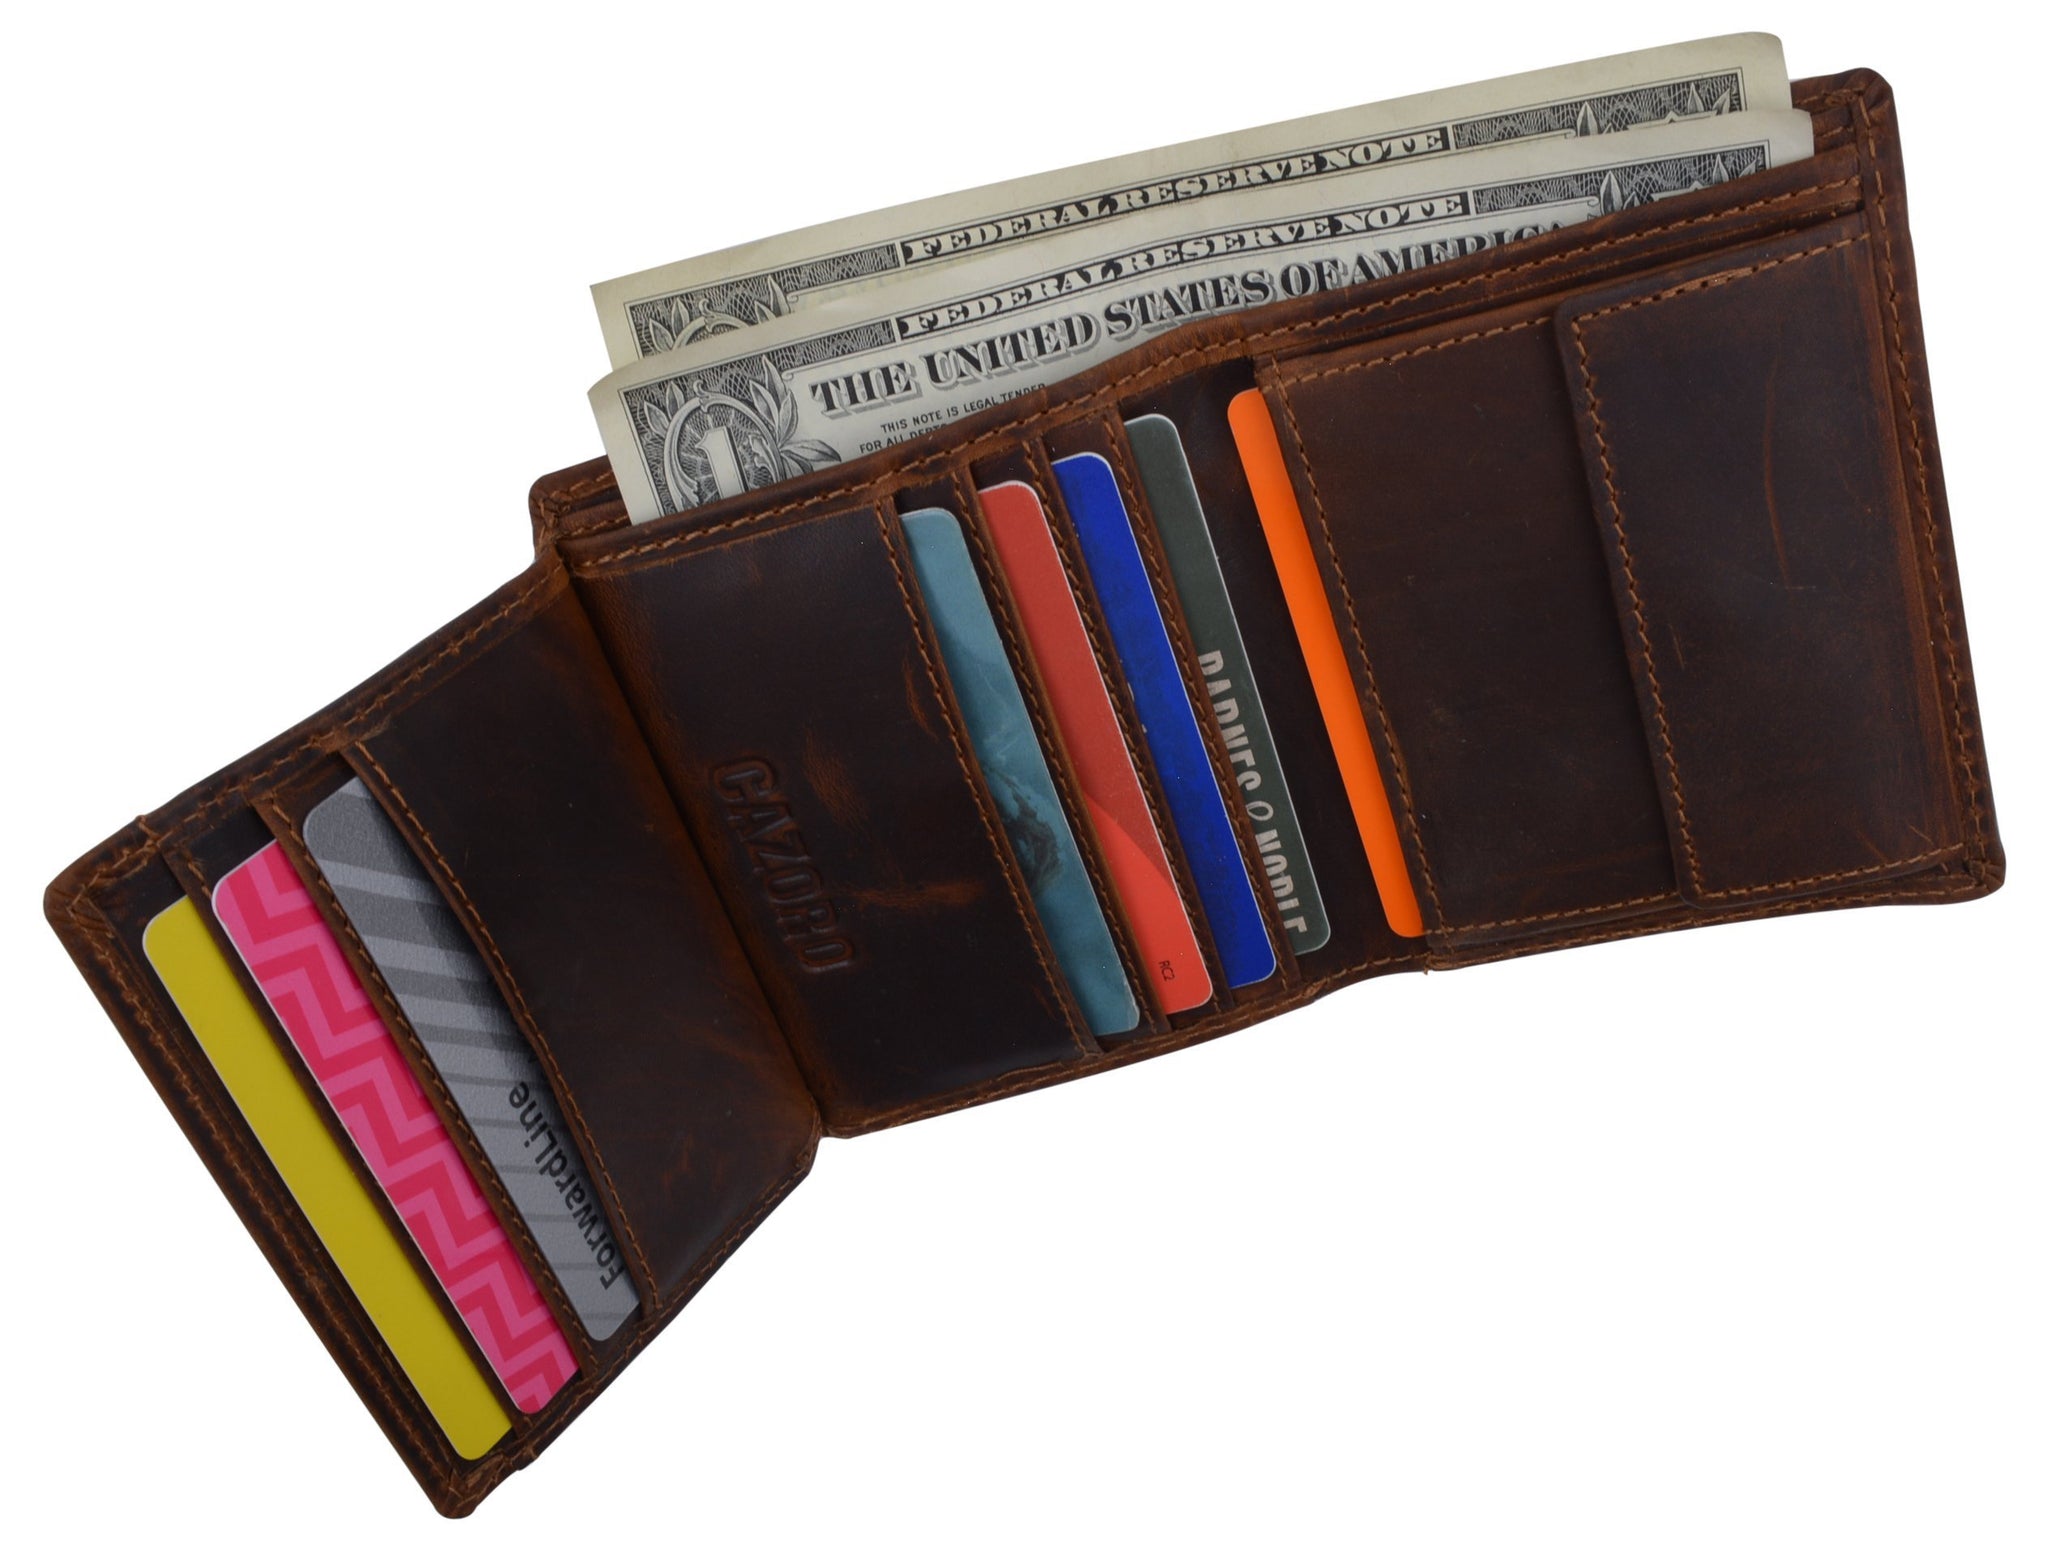 Cazoro Men's RFID Blocking Bi-Fold Style Wallet